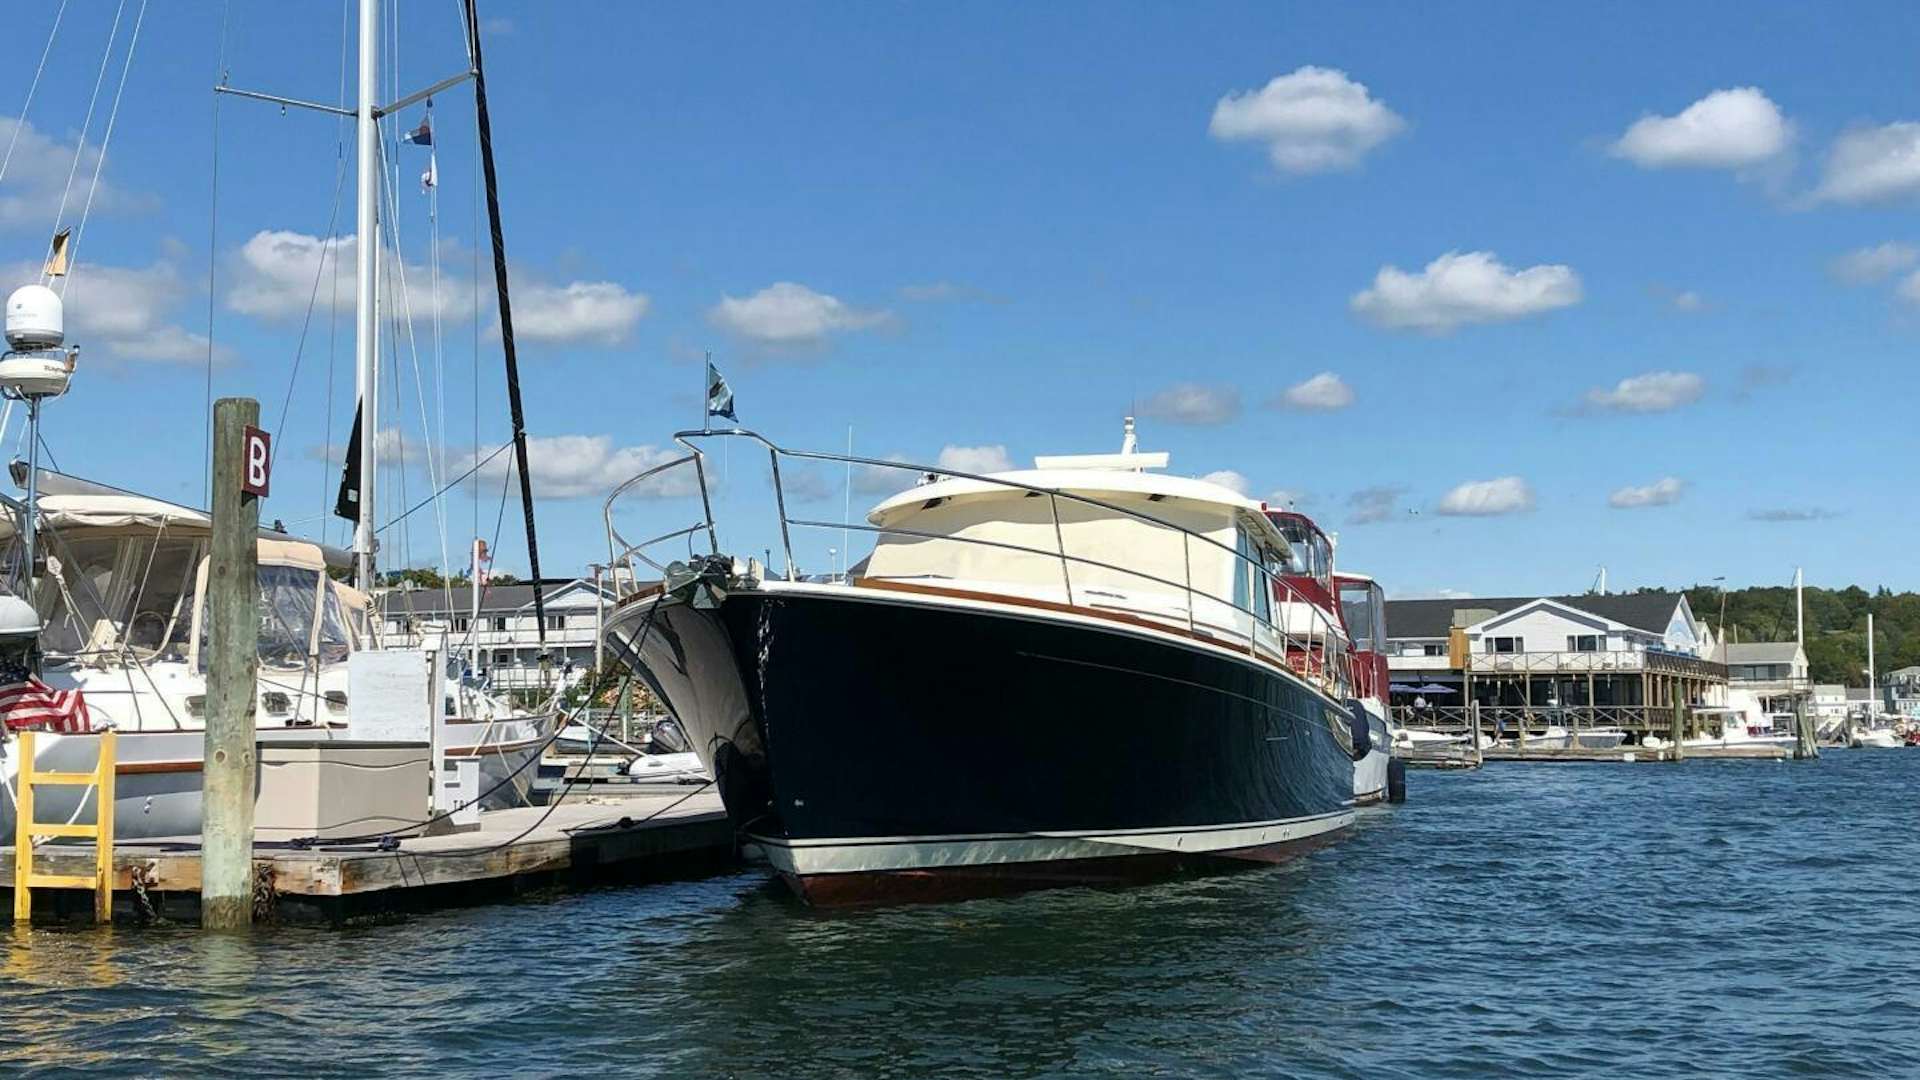 Padarecas
Yacht for Sale